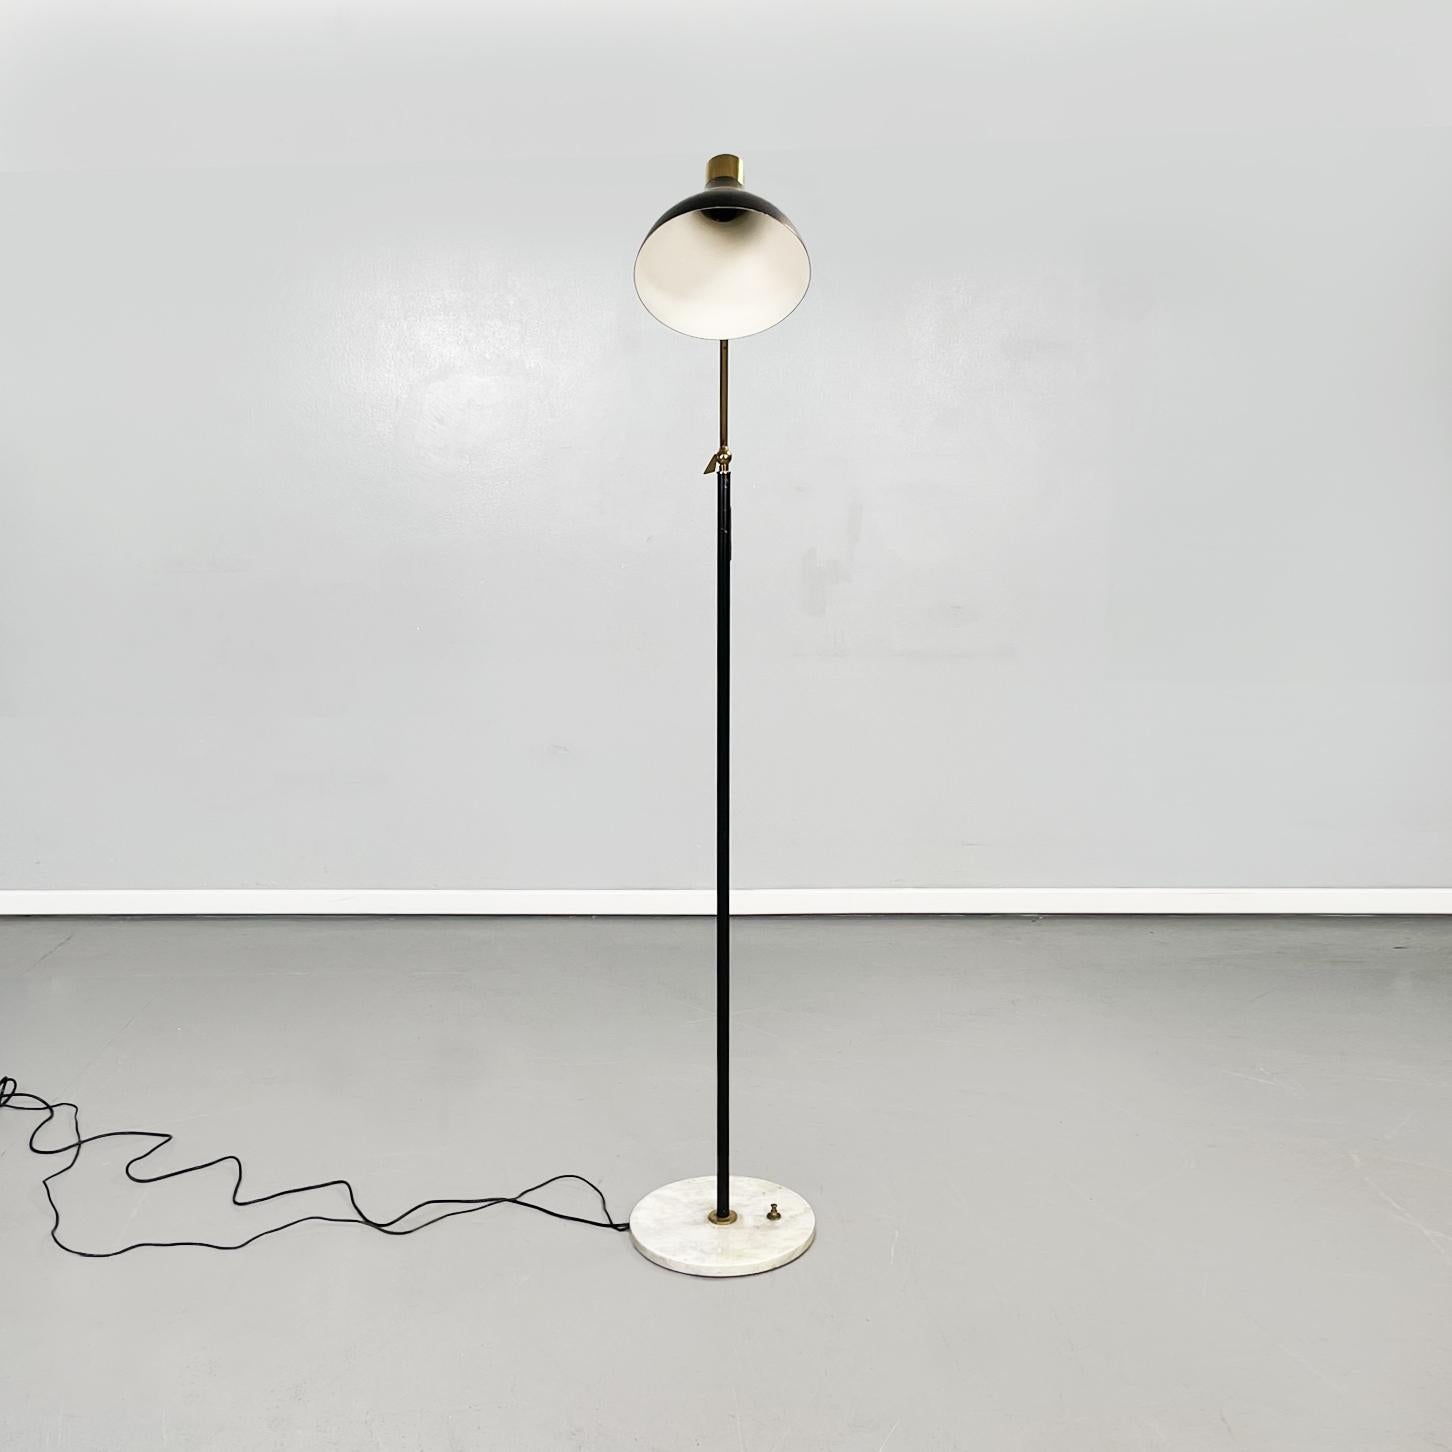 Mid-20th Century Italian Mid-Century Modern Adjustable Brass Metal Floor Lamp by Stilux, 1950s For Sale